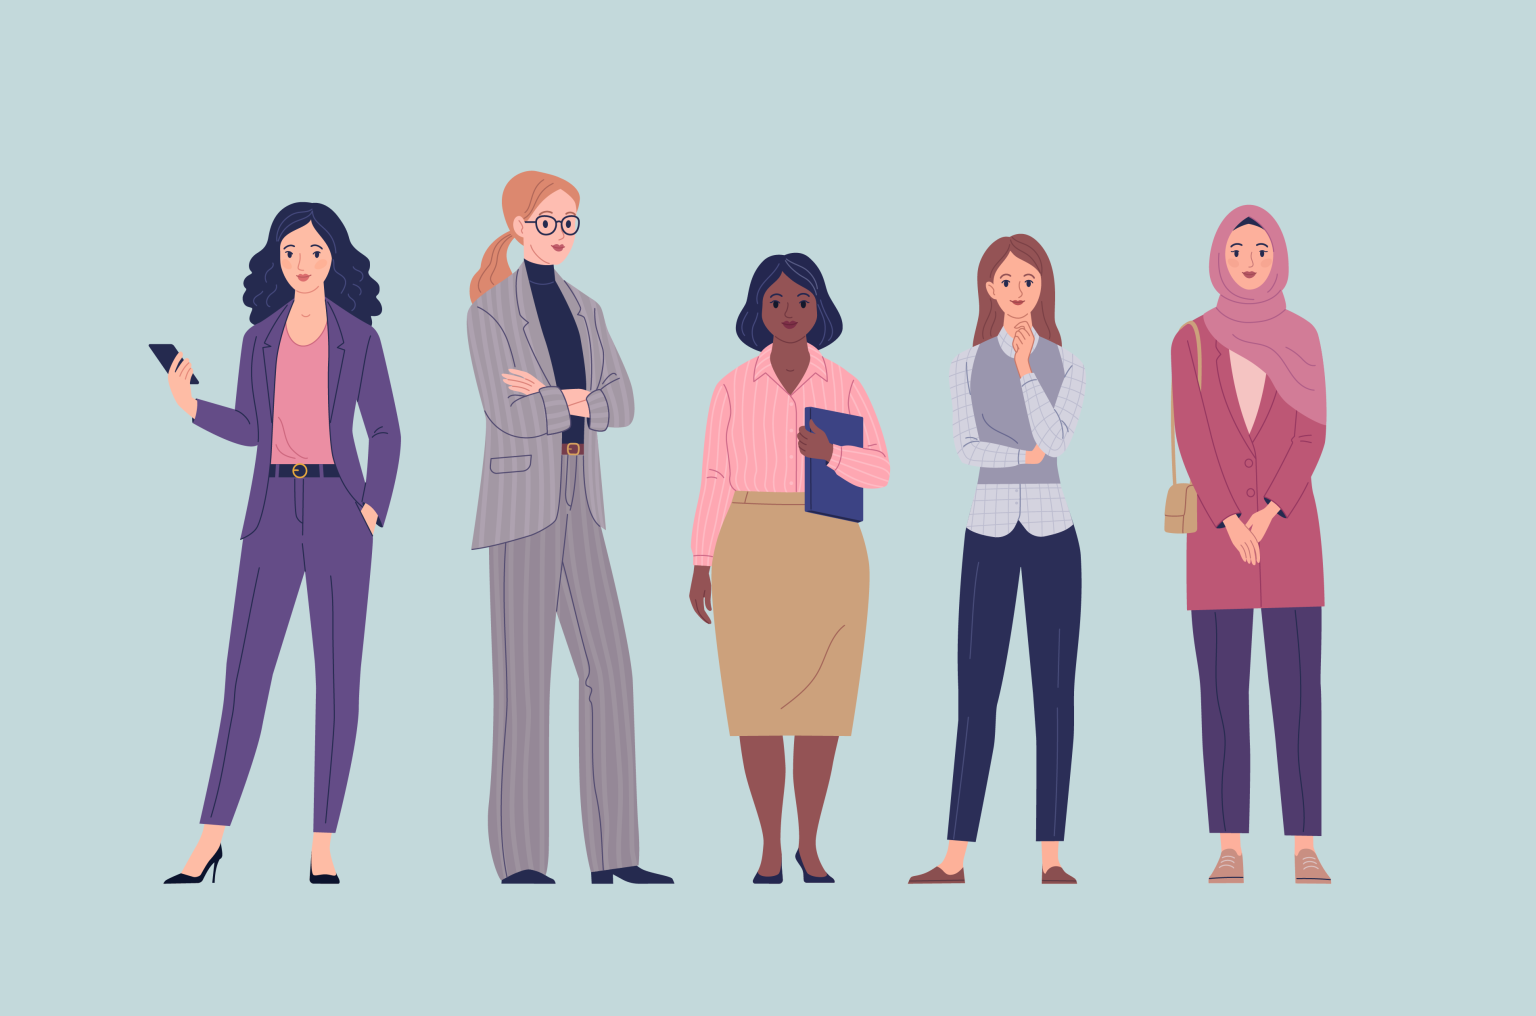 Illustrations of working women